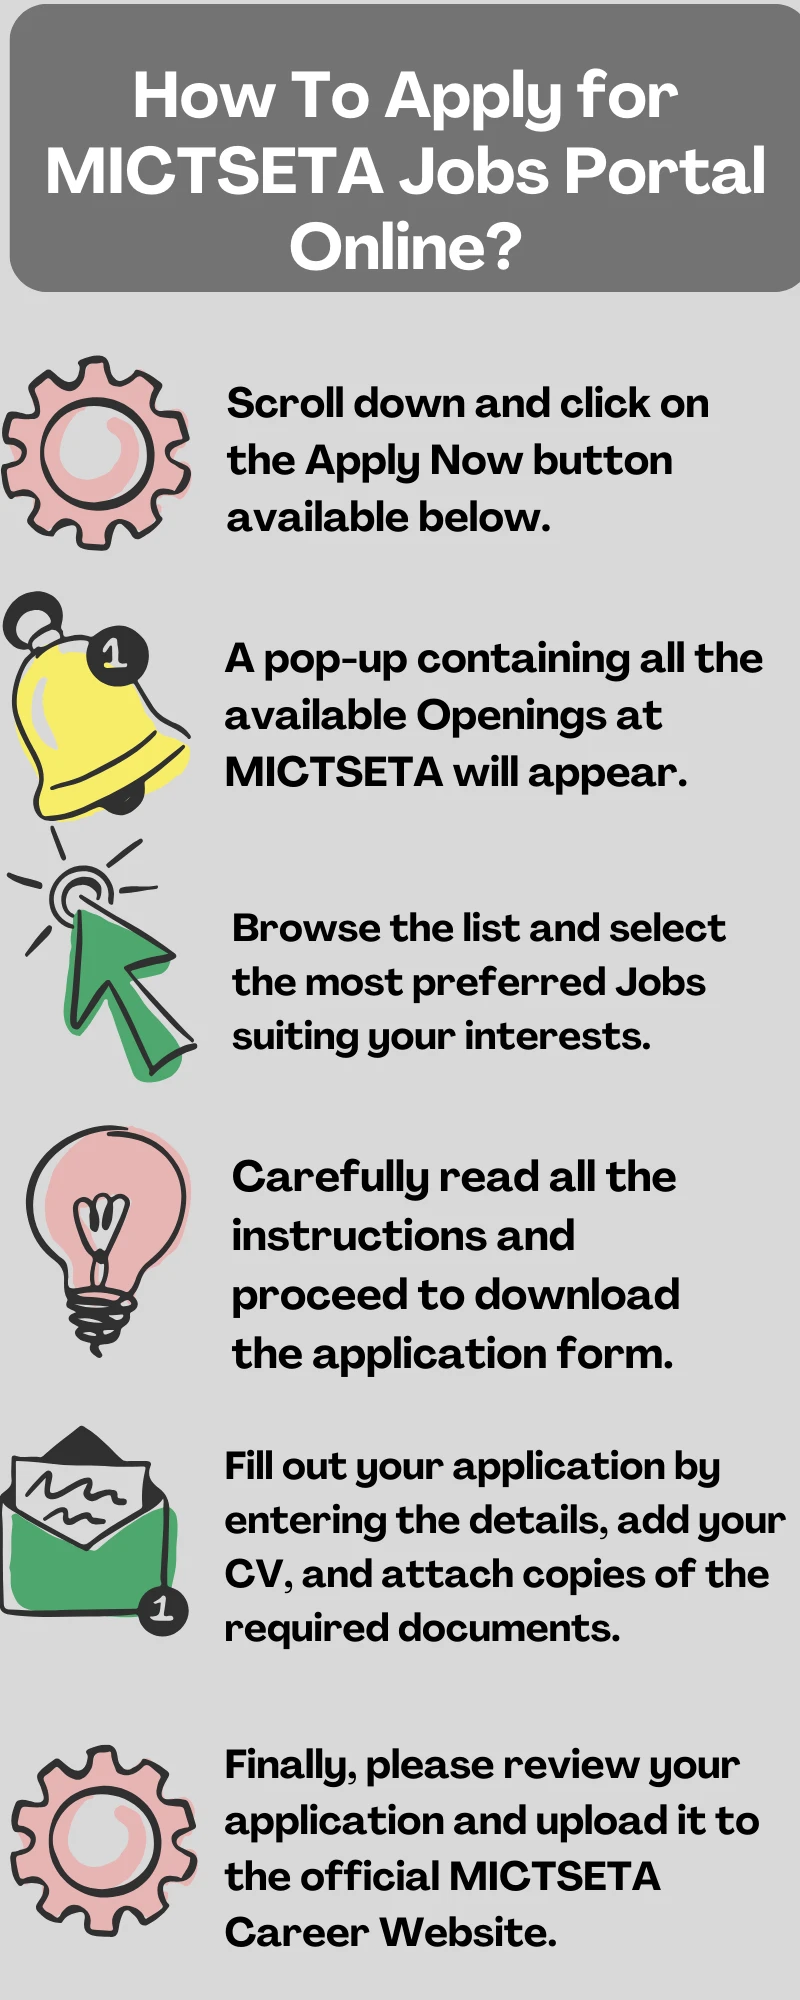 How To Apply for MICTSETA Jobs Portal Online?